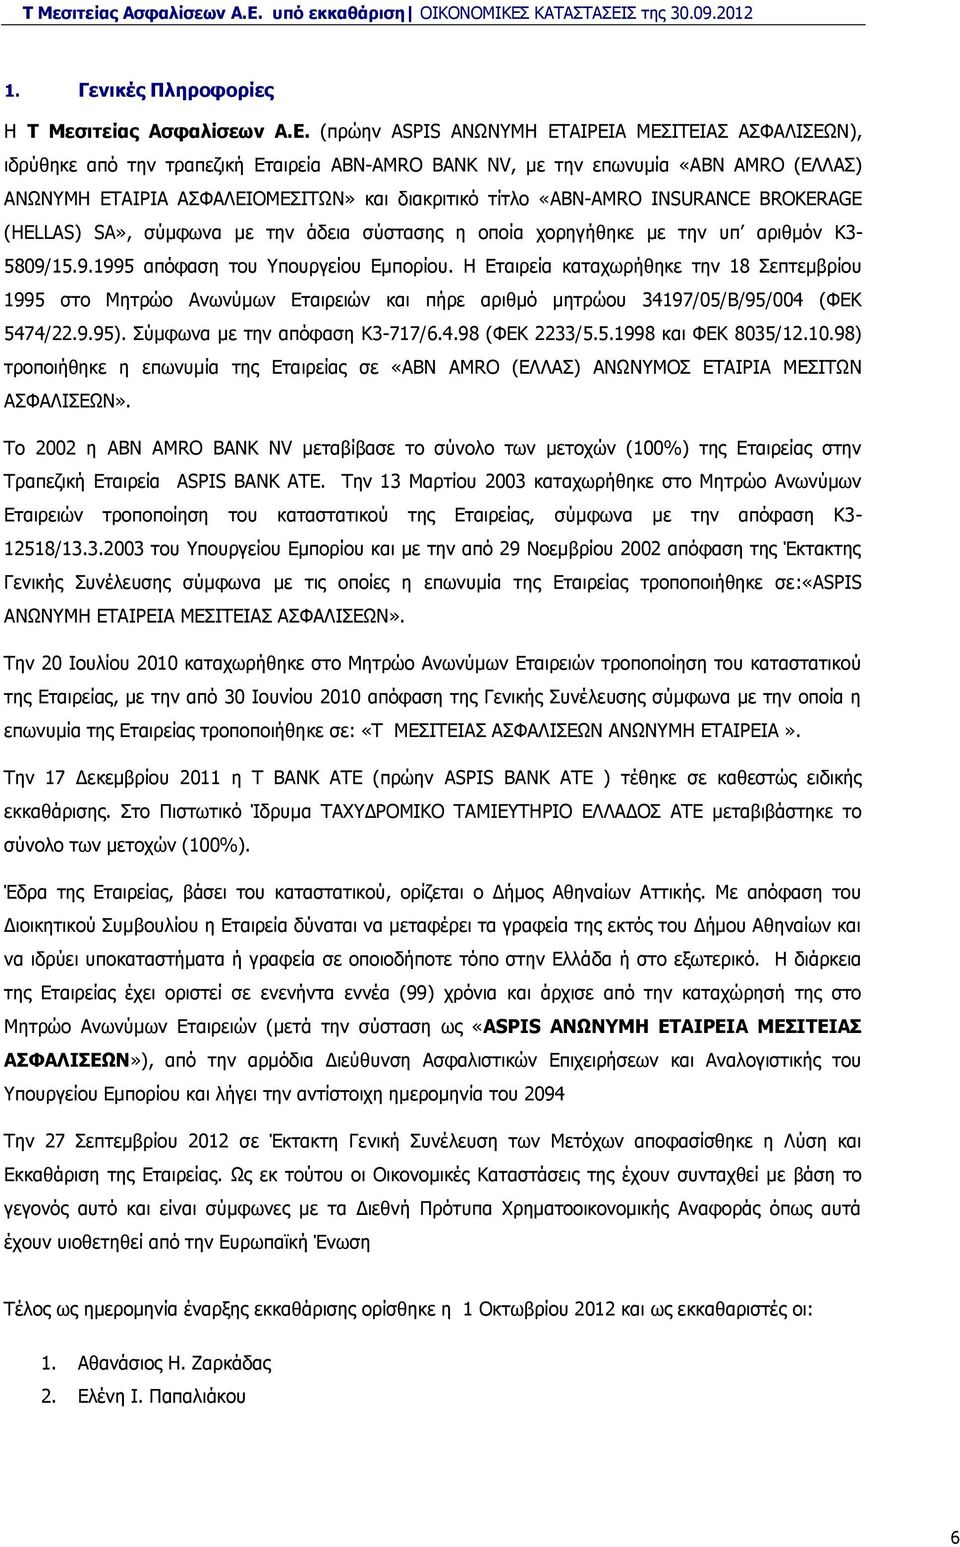 «ABN-AMRO INSURANCE BROKERAGE (HELLAS) SA», σύμφωνα με την άδεια σύστασης η οποία χορηγήθηκε με την υπ αριθμόν Κ3-5809/15.9.1995 απόφαση του Υπουργείου Εμπορίου.